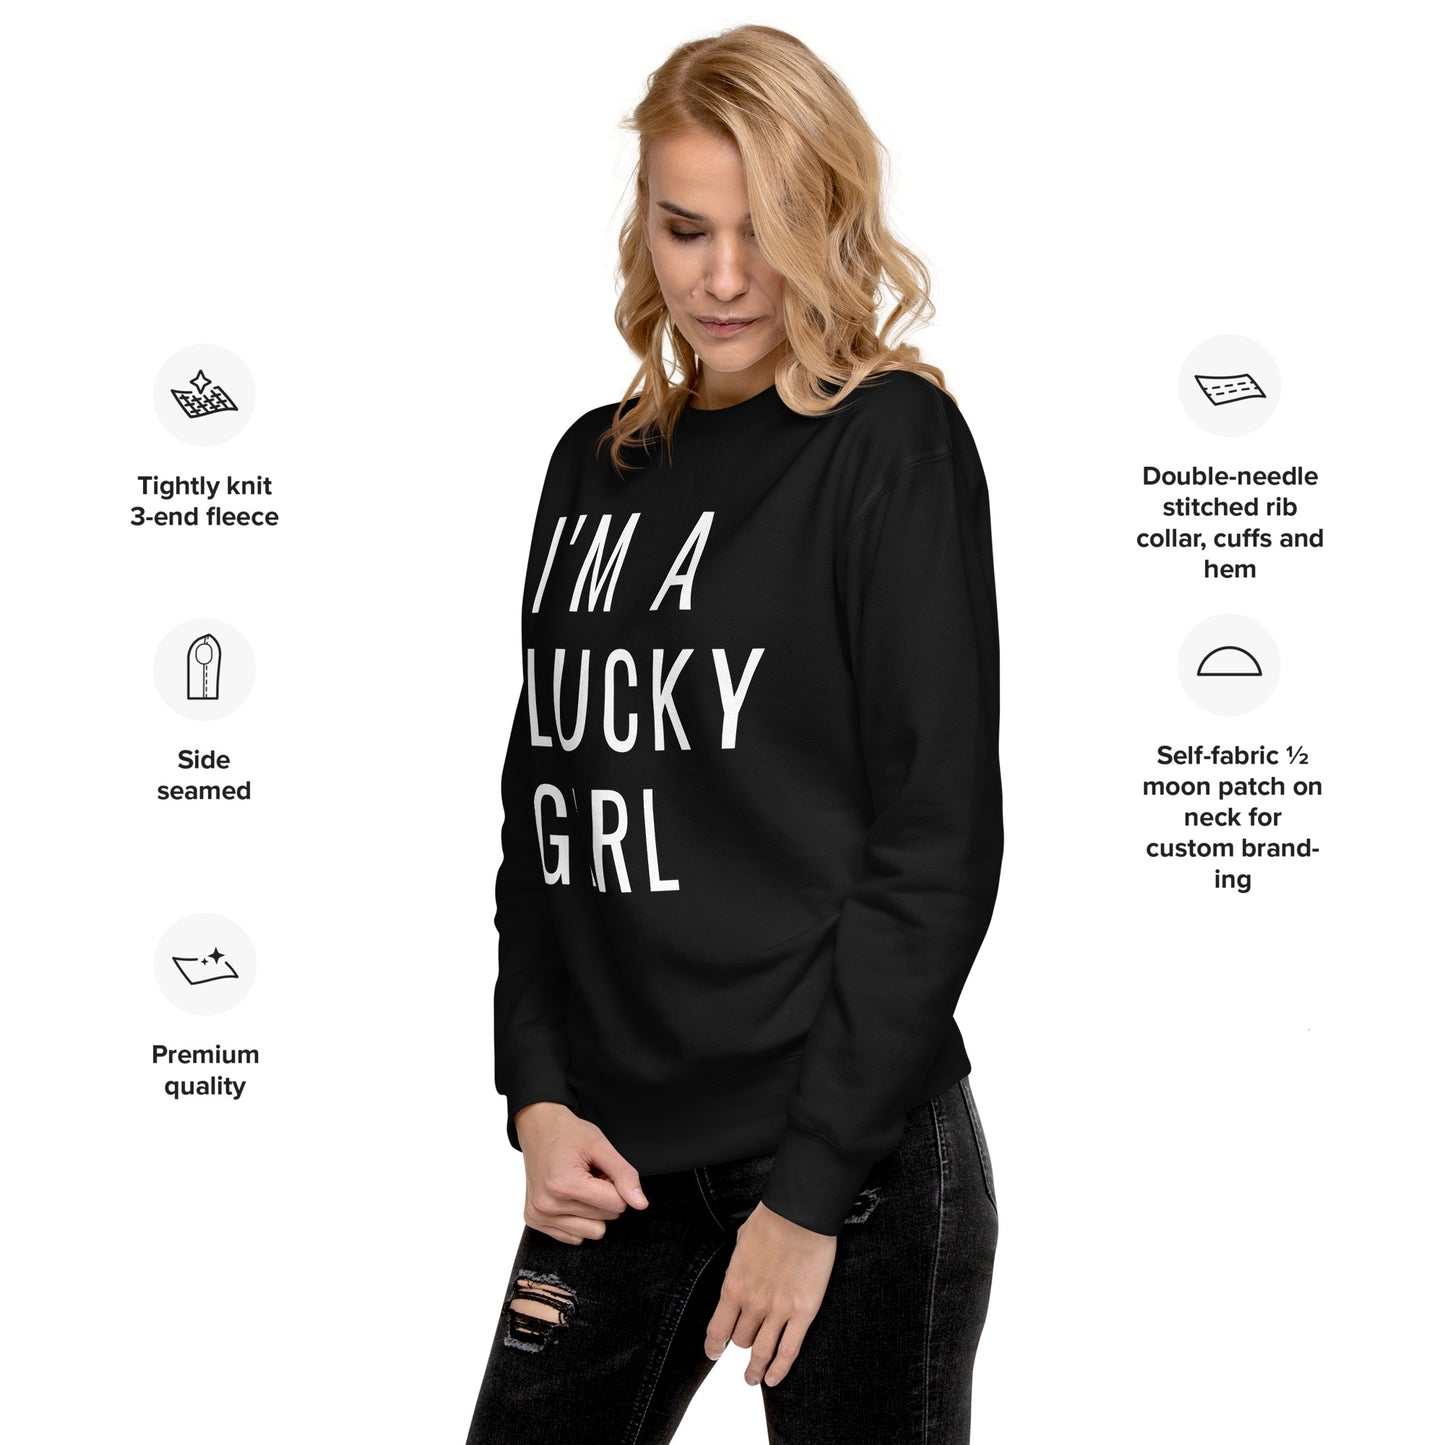 I'm a Lucky Girl Unisex Premium Sweatshirt